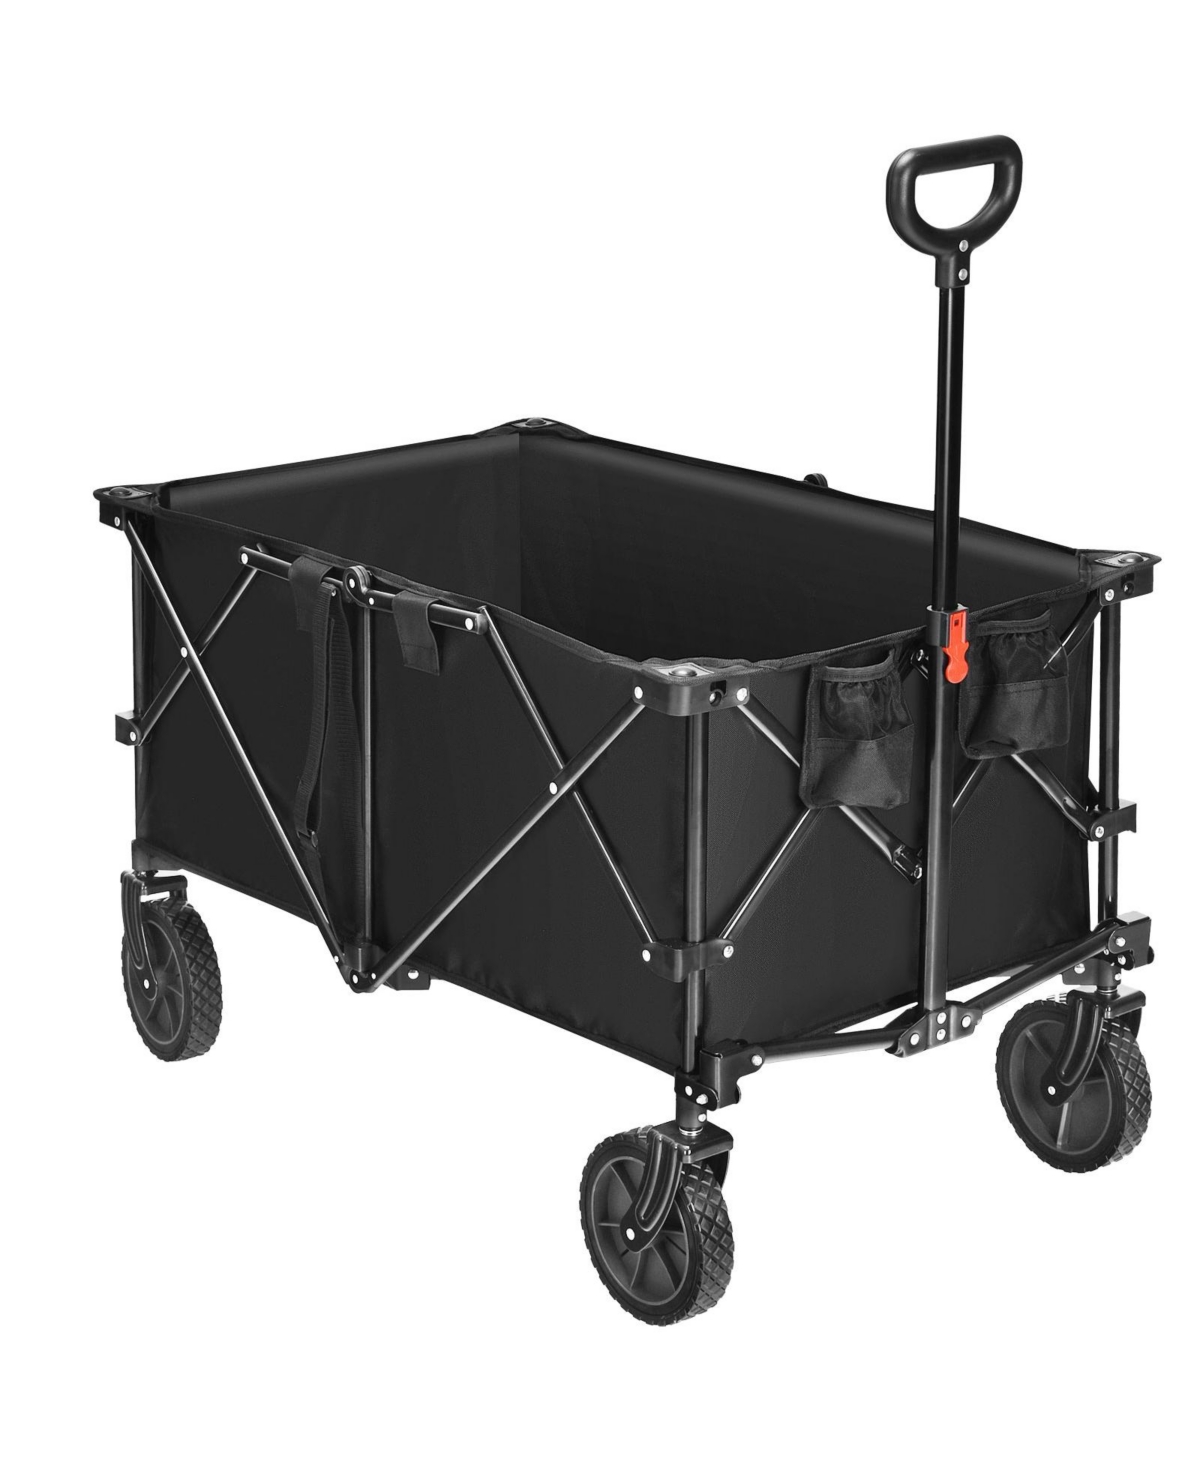 Outdoor Utility Garden Trolley Buggy -Black - Black